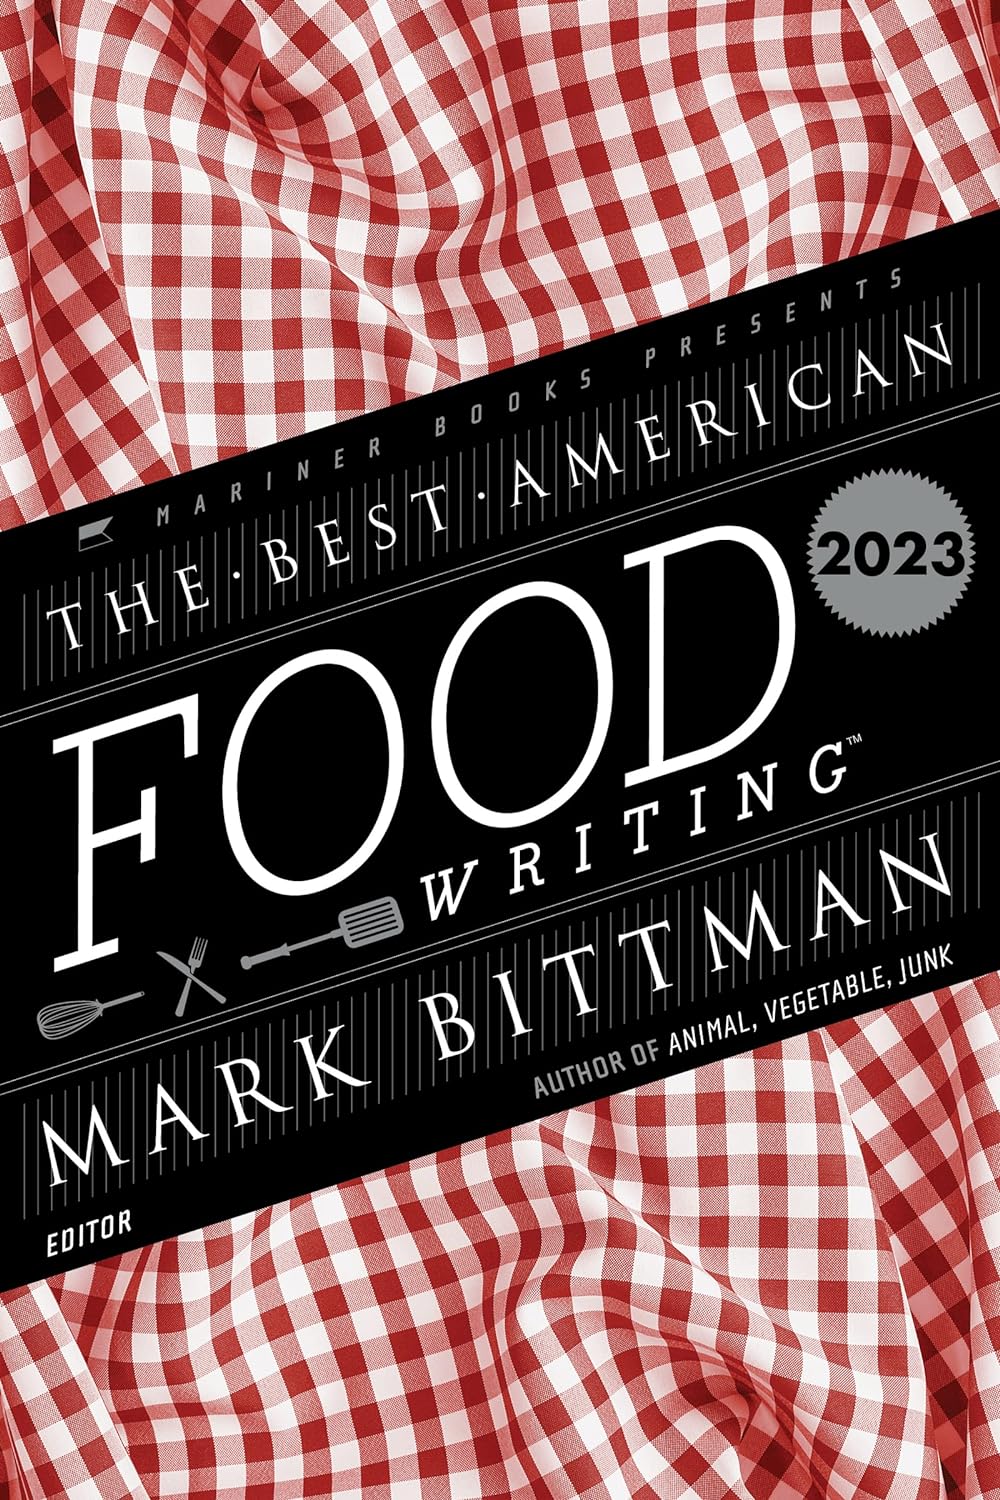 The Best American Food Writing 2023 (Mark Bittman, ed.)